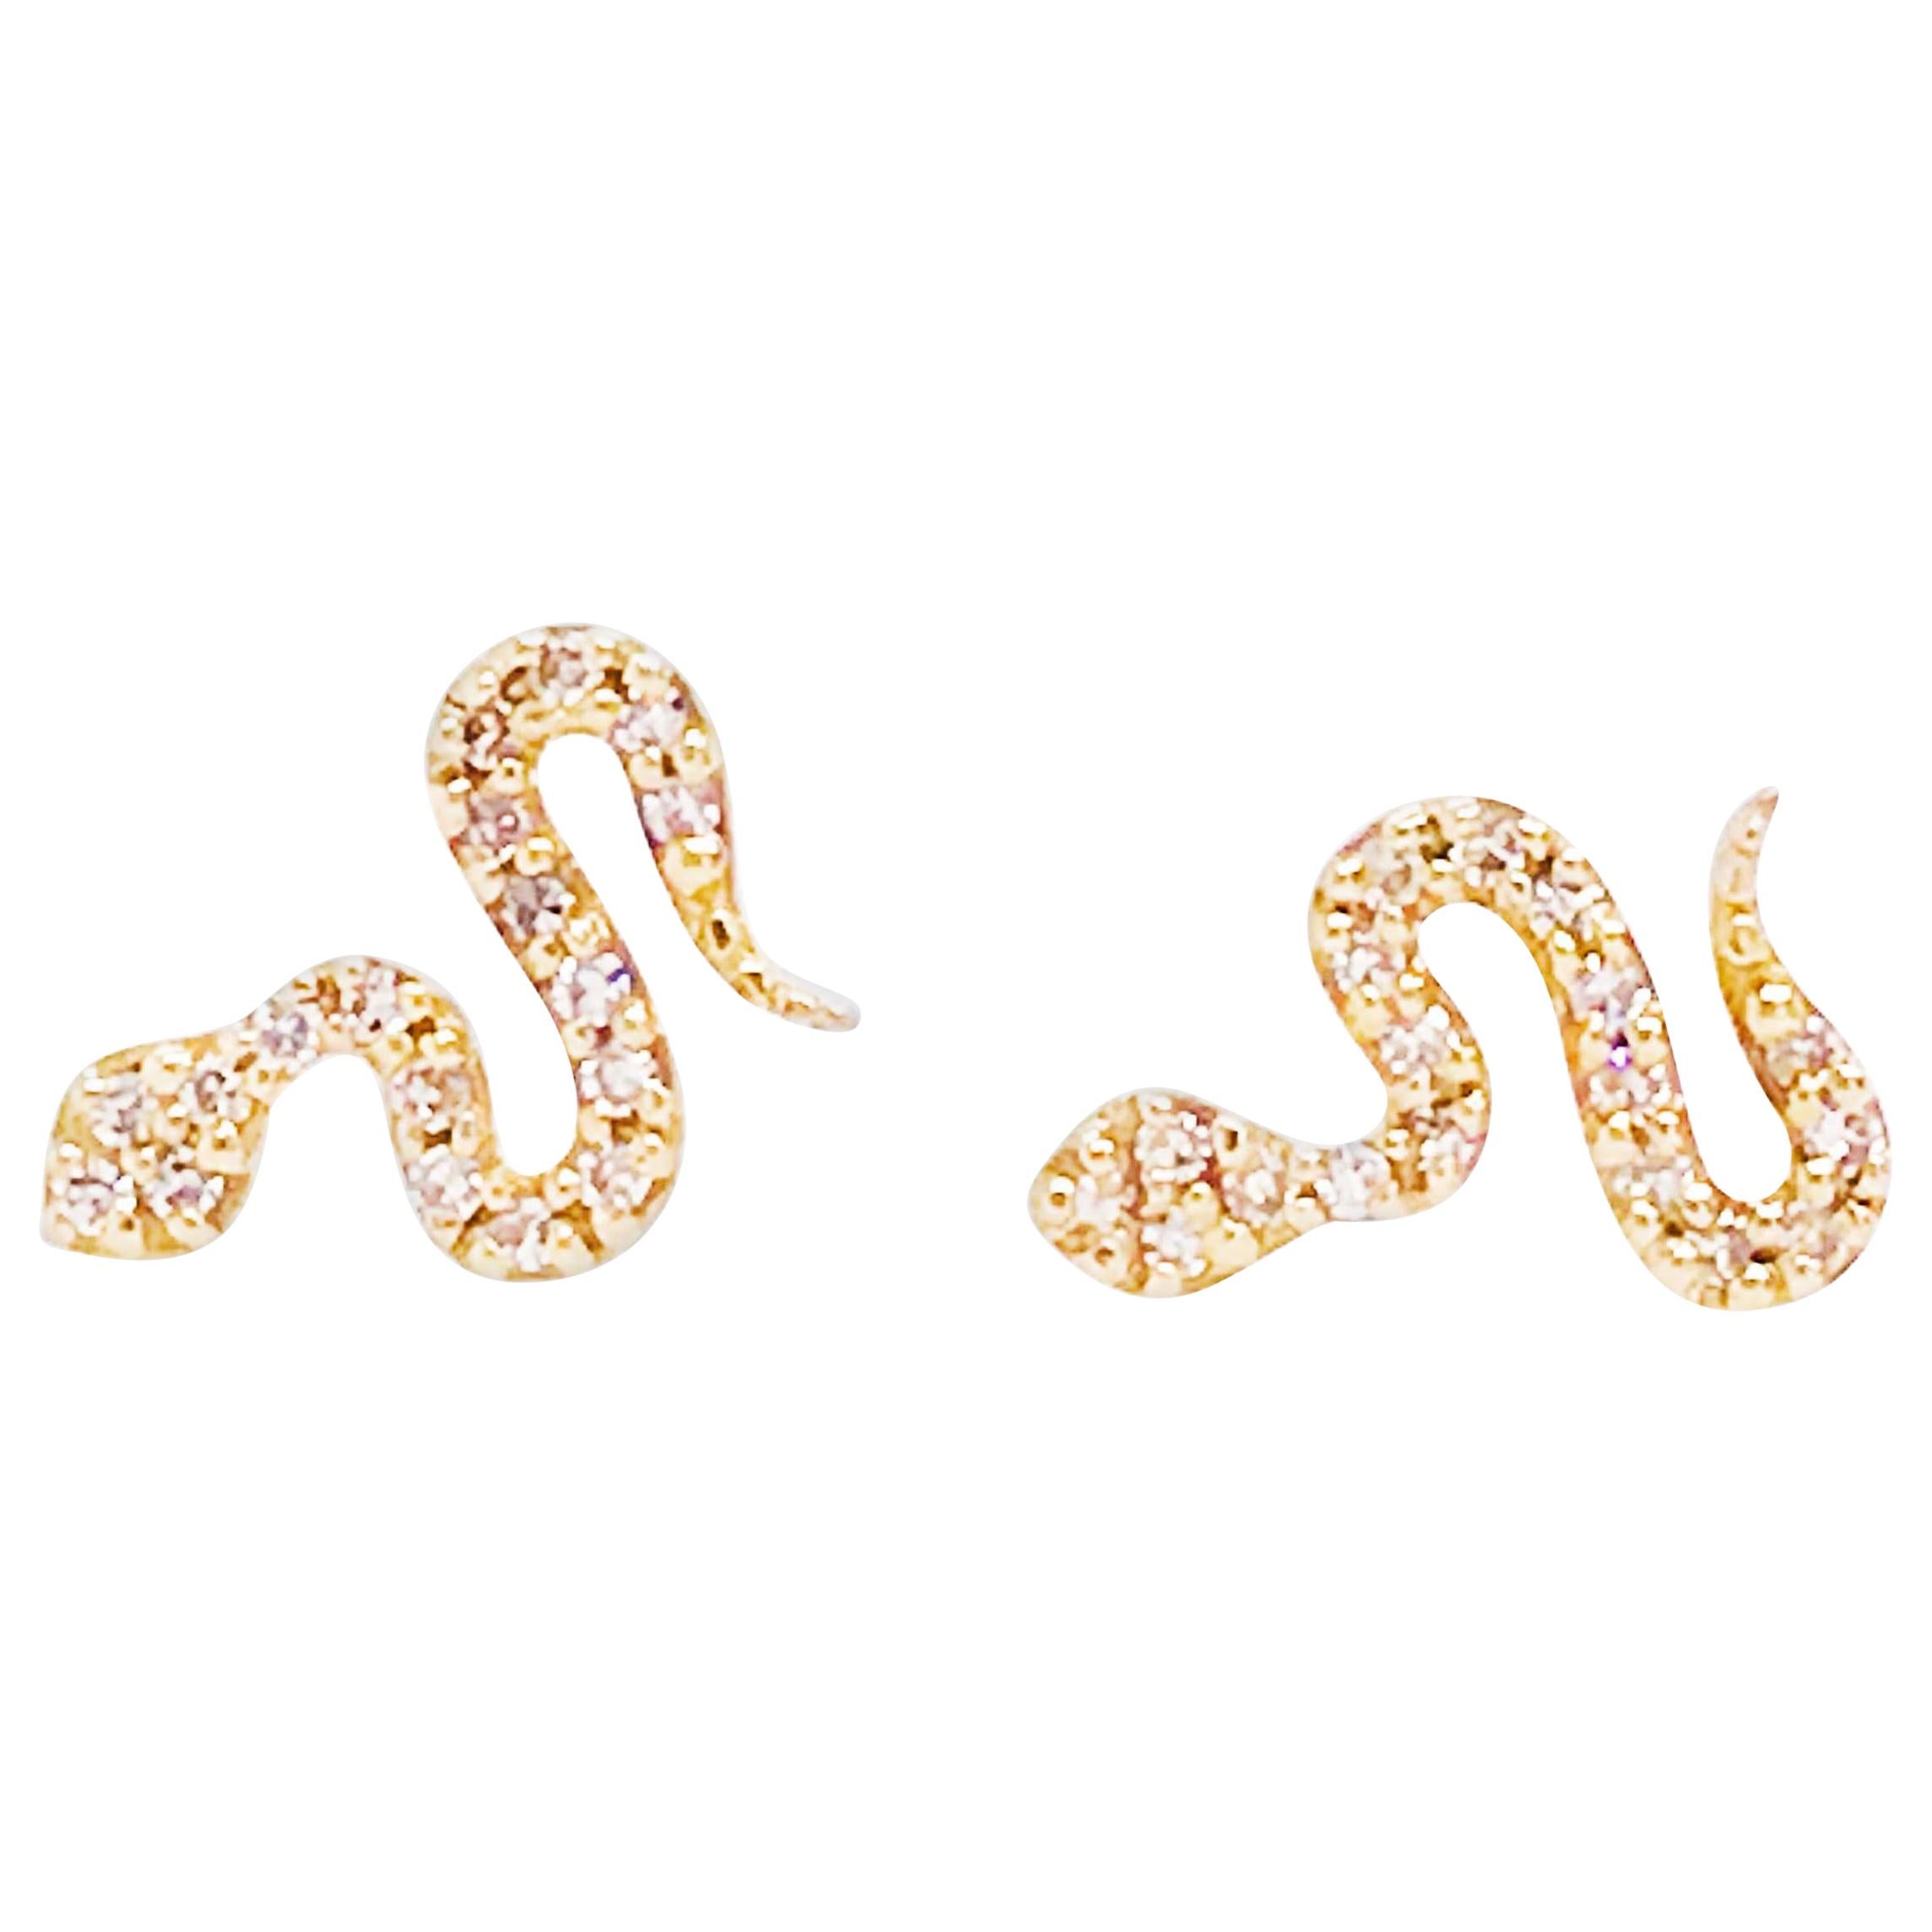 Diamond Snake Earrings, Pave Diamond Serpent Earring Studs in Yellow Gold